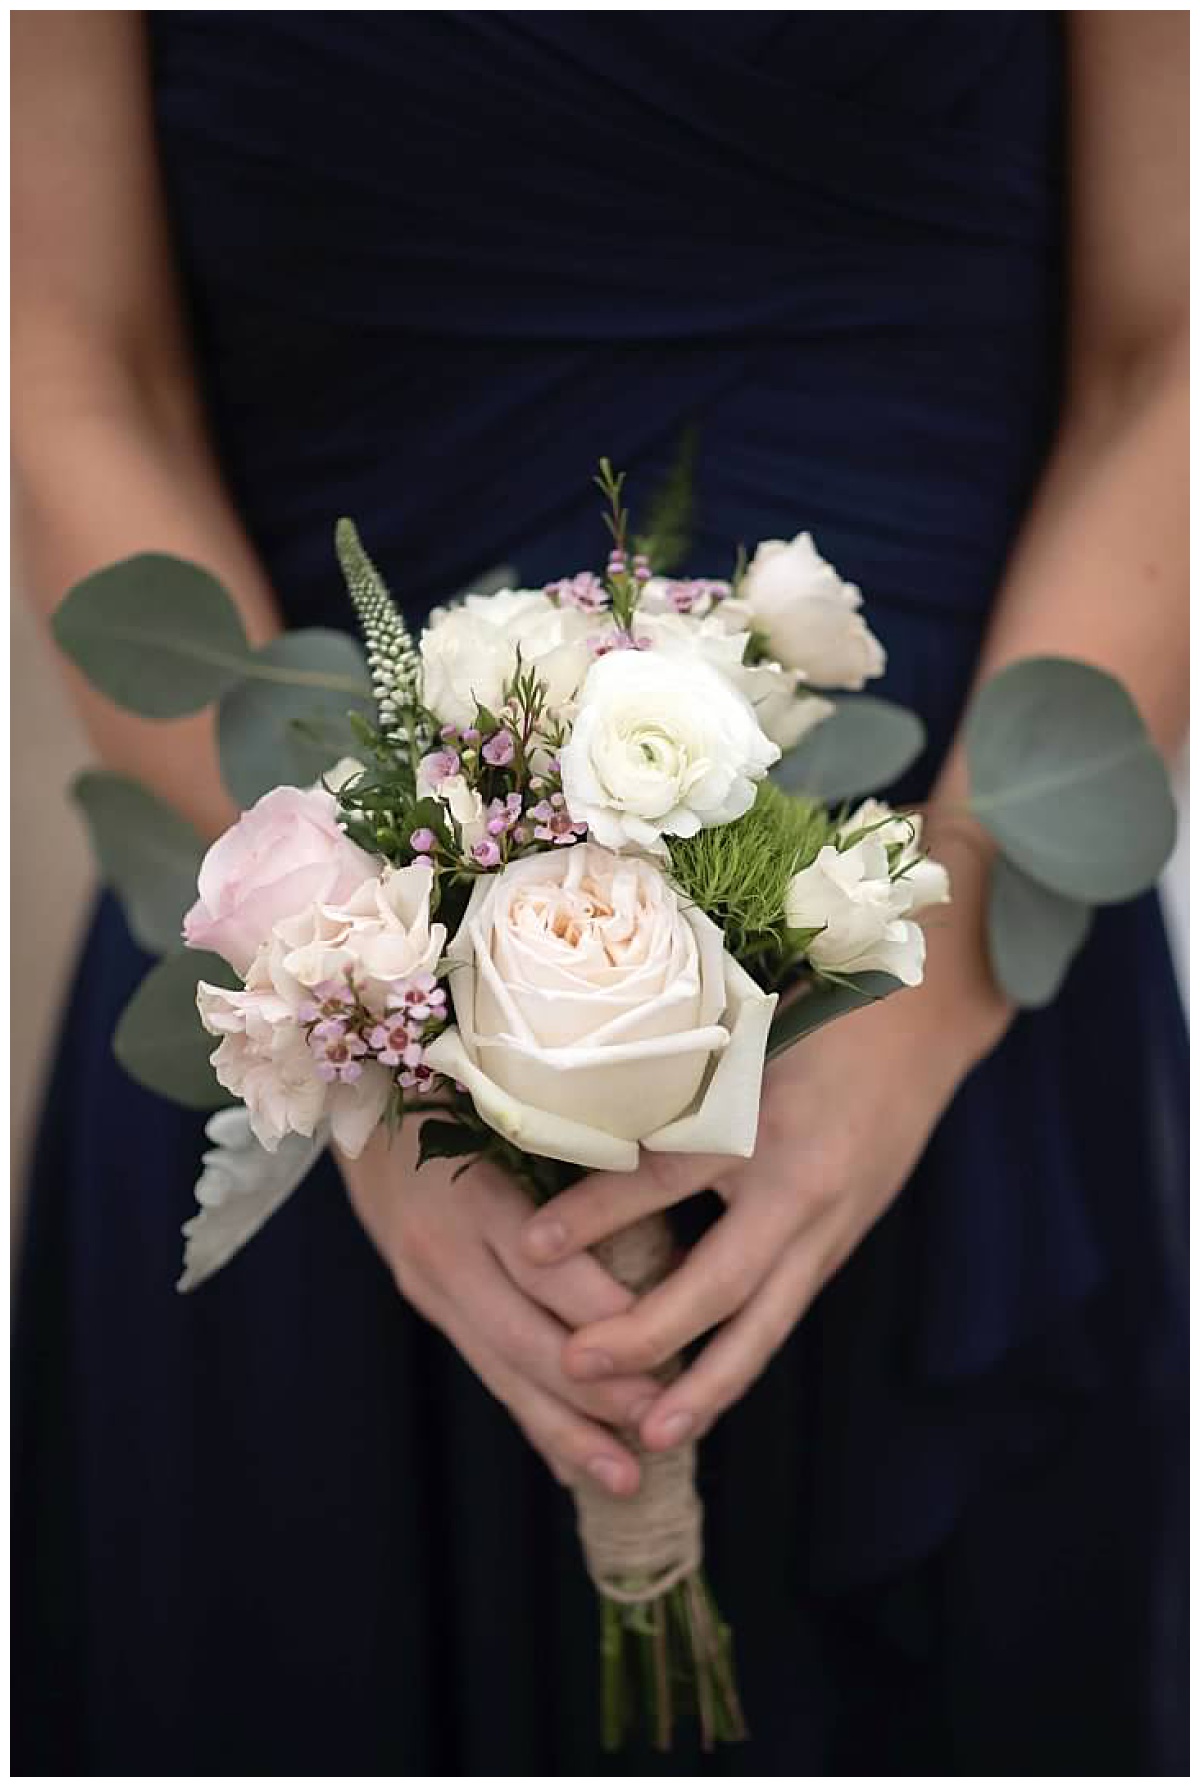 Posy Style Bridesmaid Bouquet by Emery's Buffalo Creek Floral team for a Texas Winter Wedding